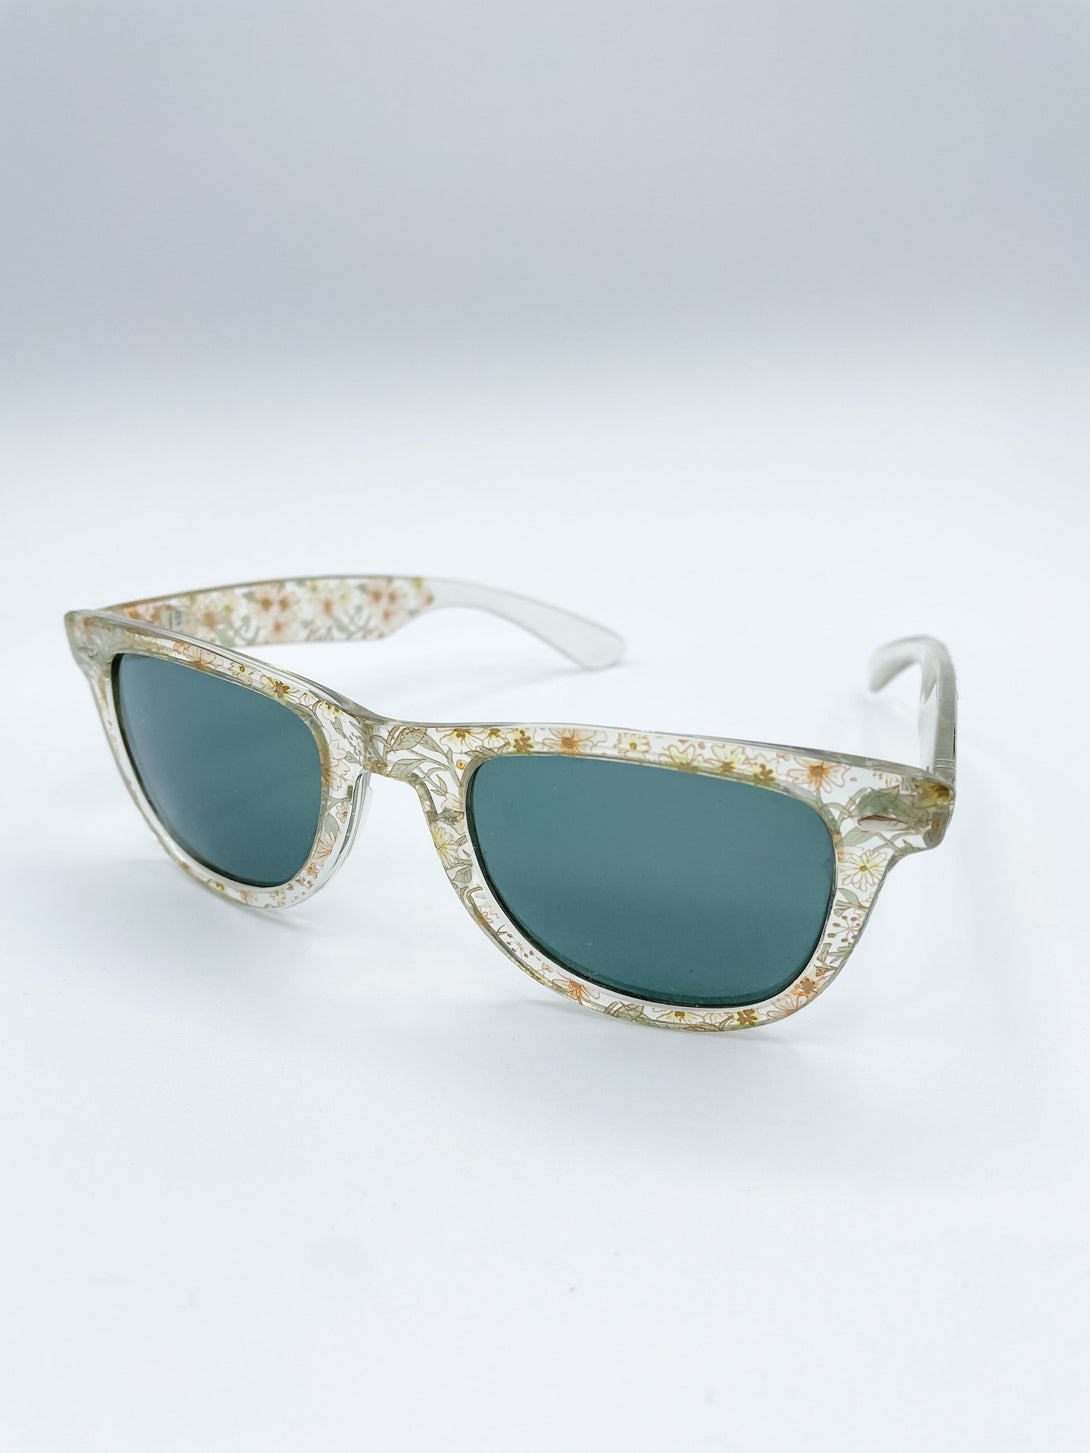 French Vintage Floral Wayfarer Style Sunglasses